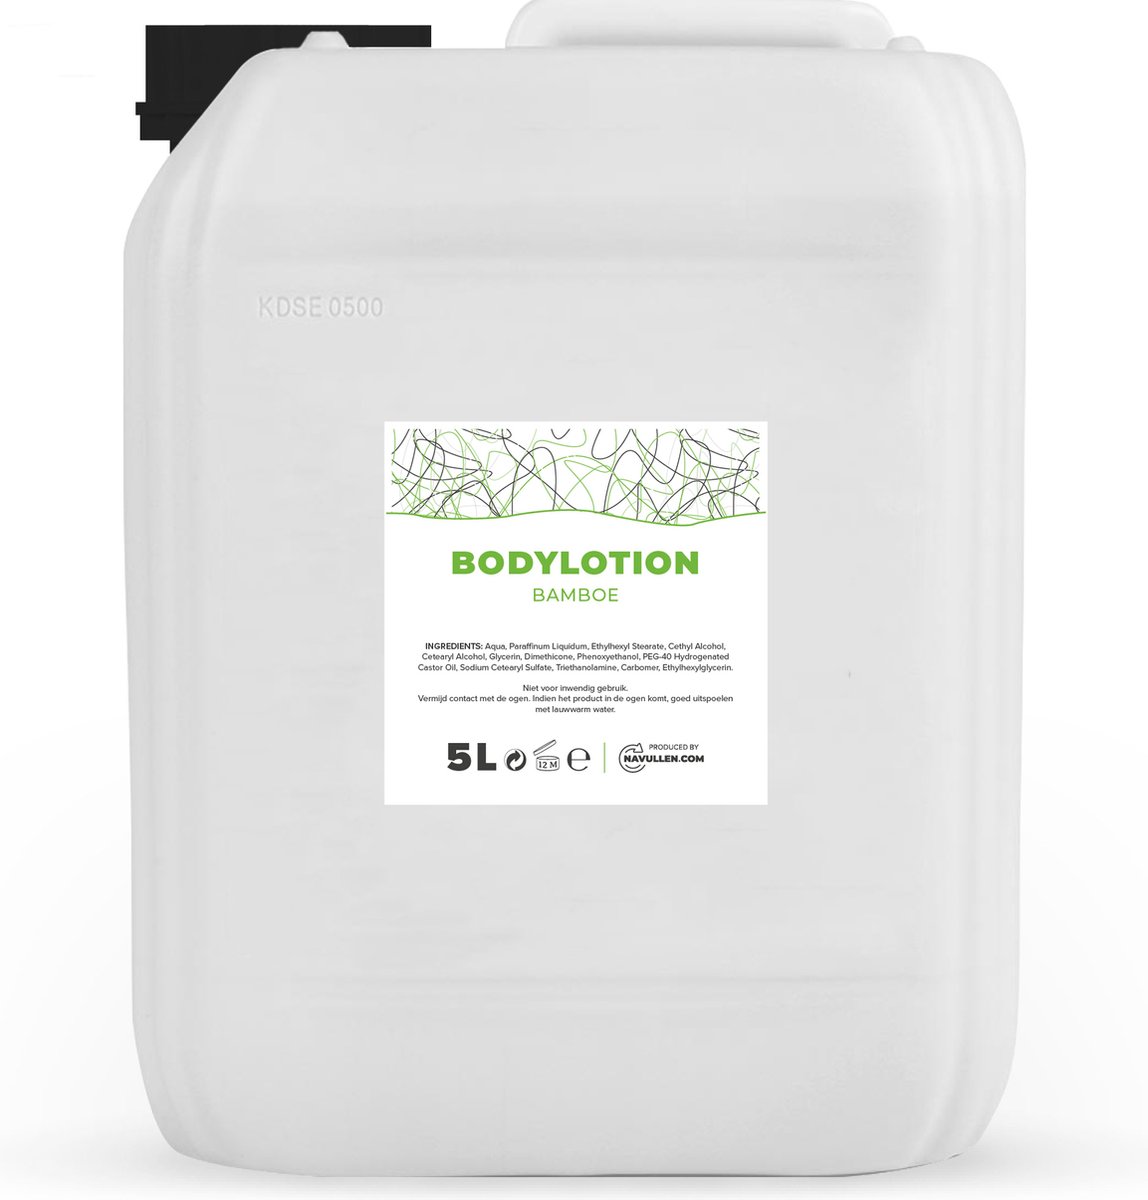 Bodylotion - Bamboe - 5 Liter - Jerrycan - Navulling - Navullen